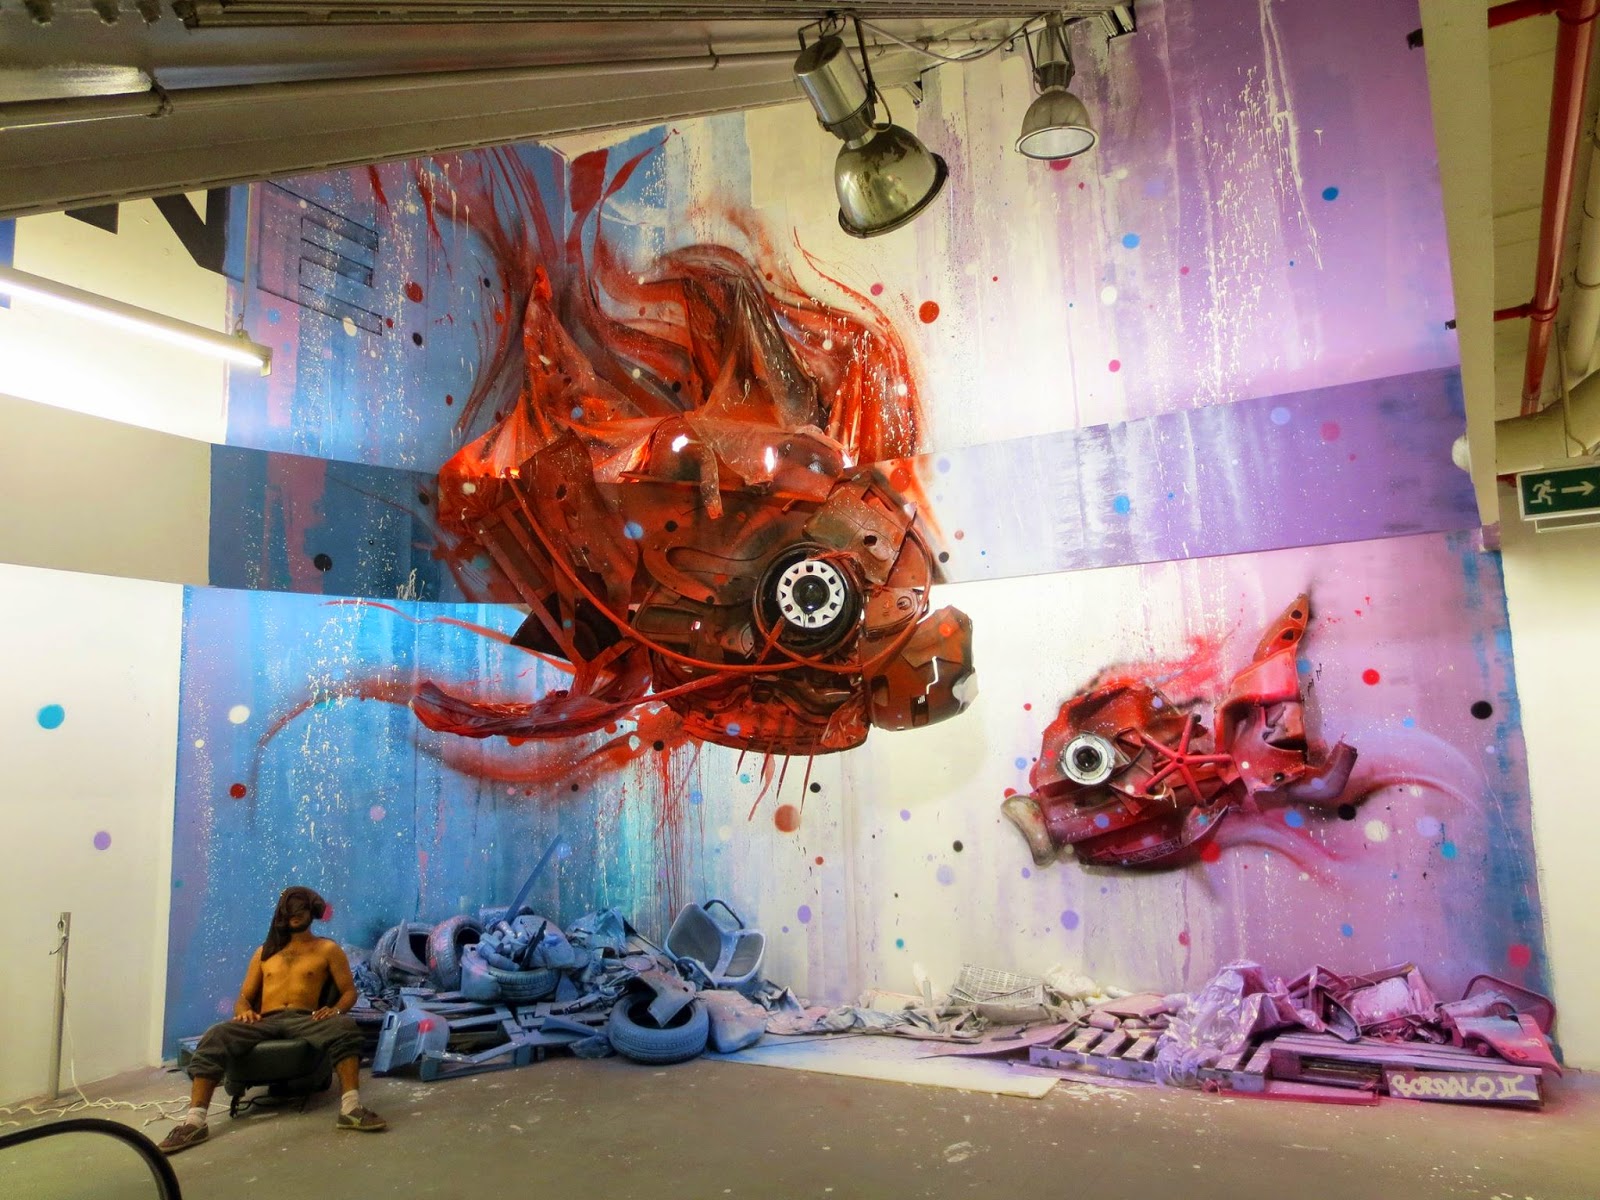 Bordalo II - "Dirty Aquarium" in Lisbon, Portugal. Via StreetArtNews.